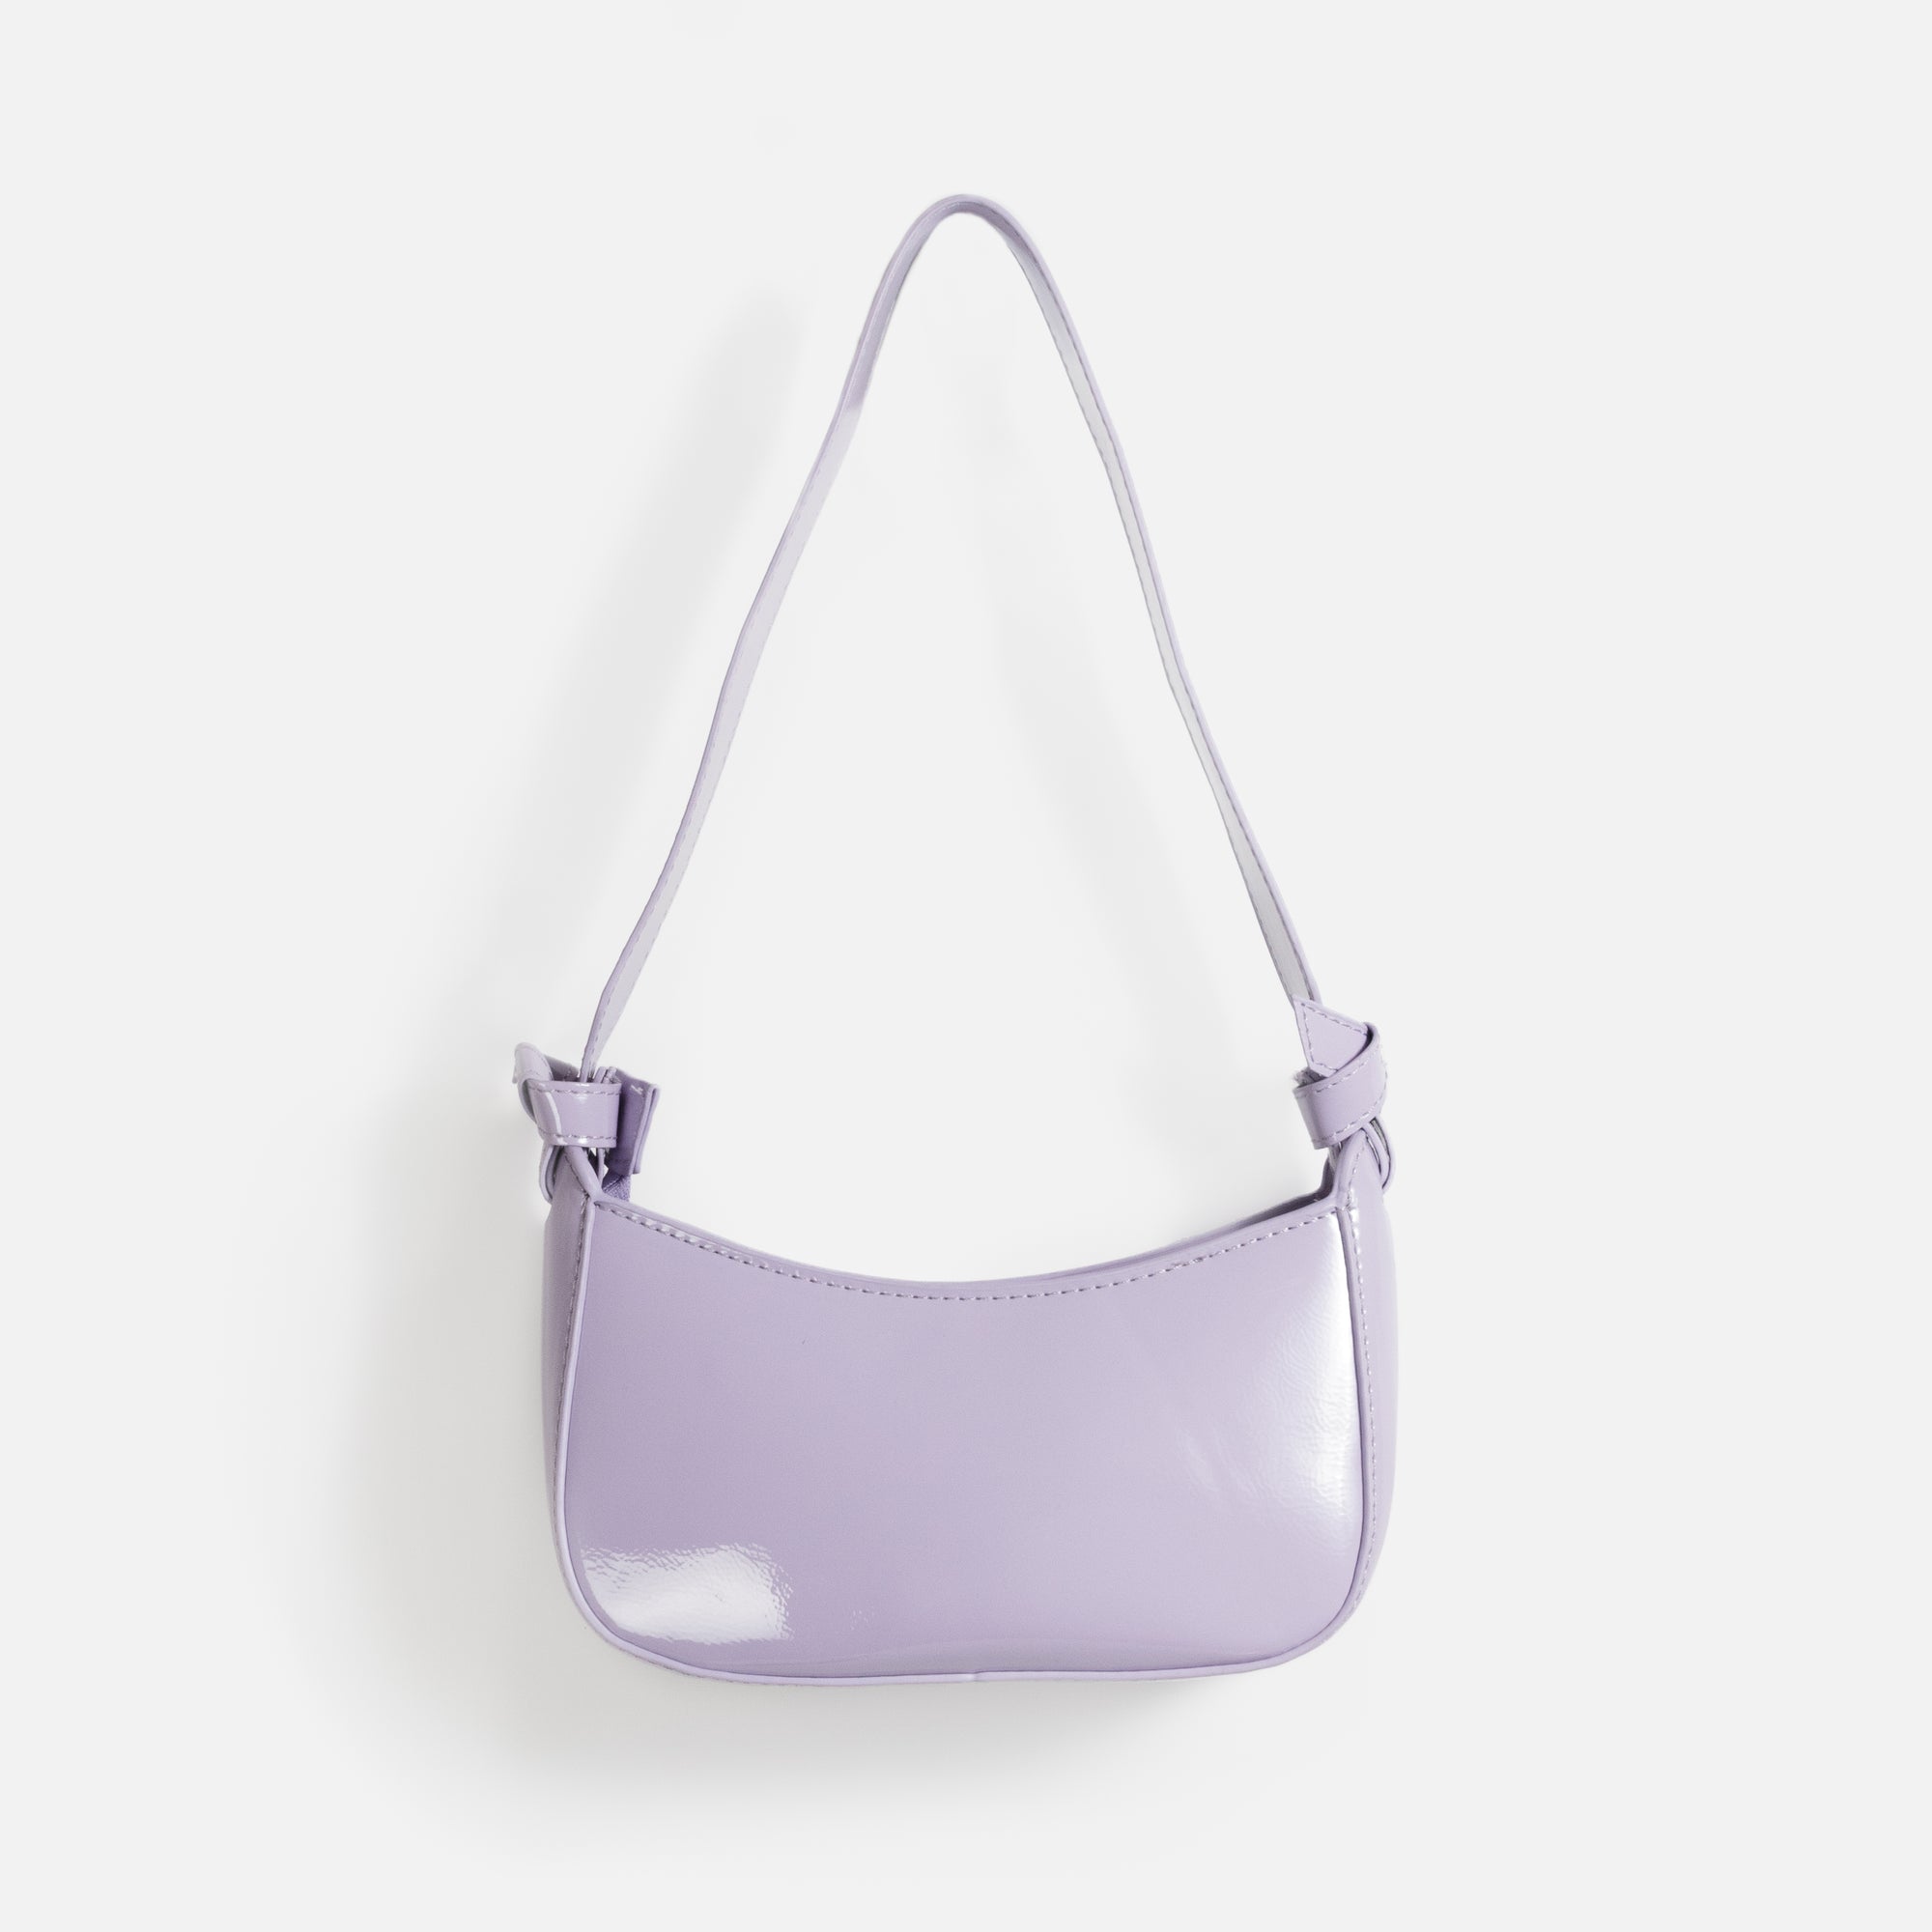 Lilac shoulder handbag with bows